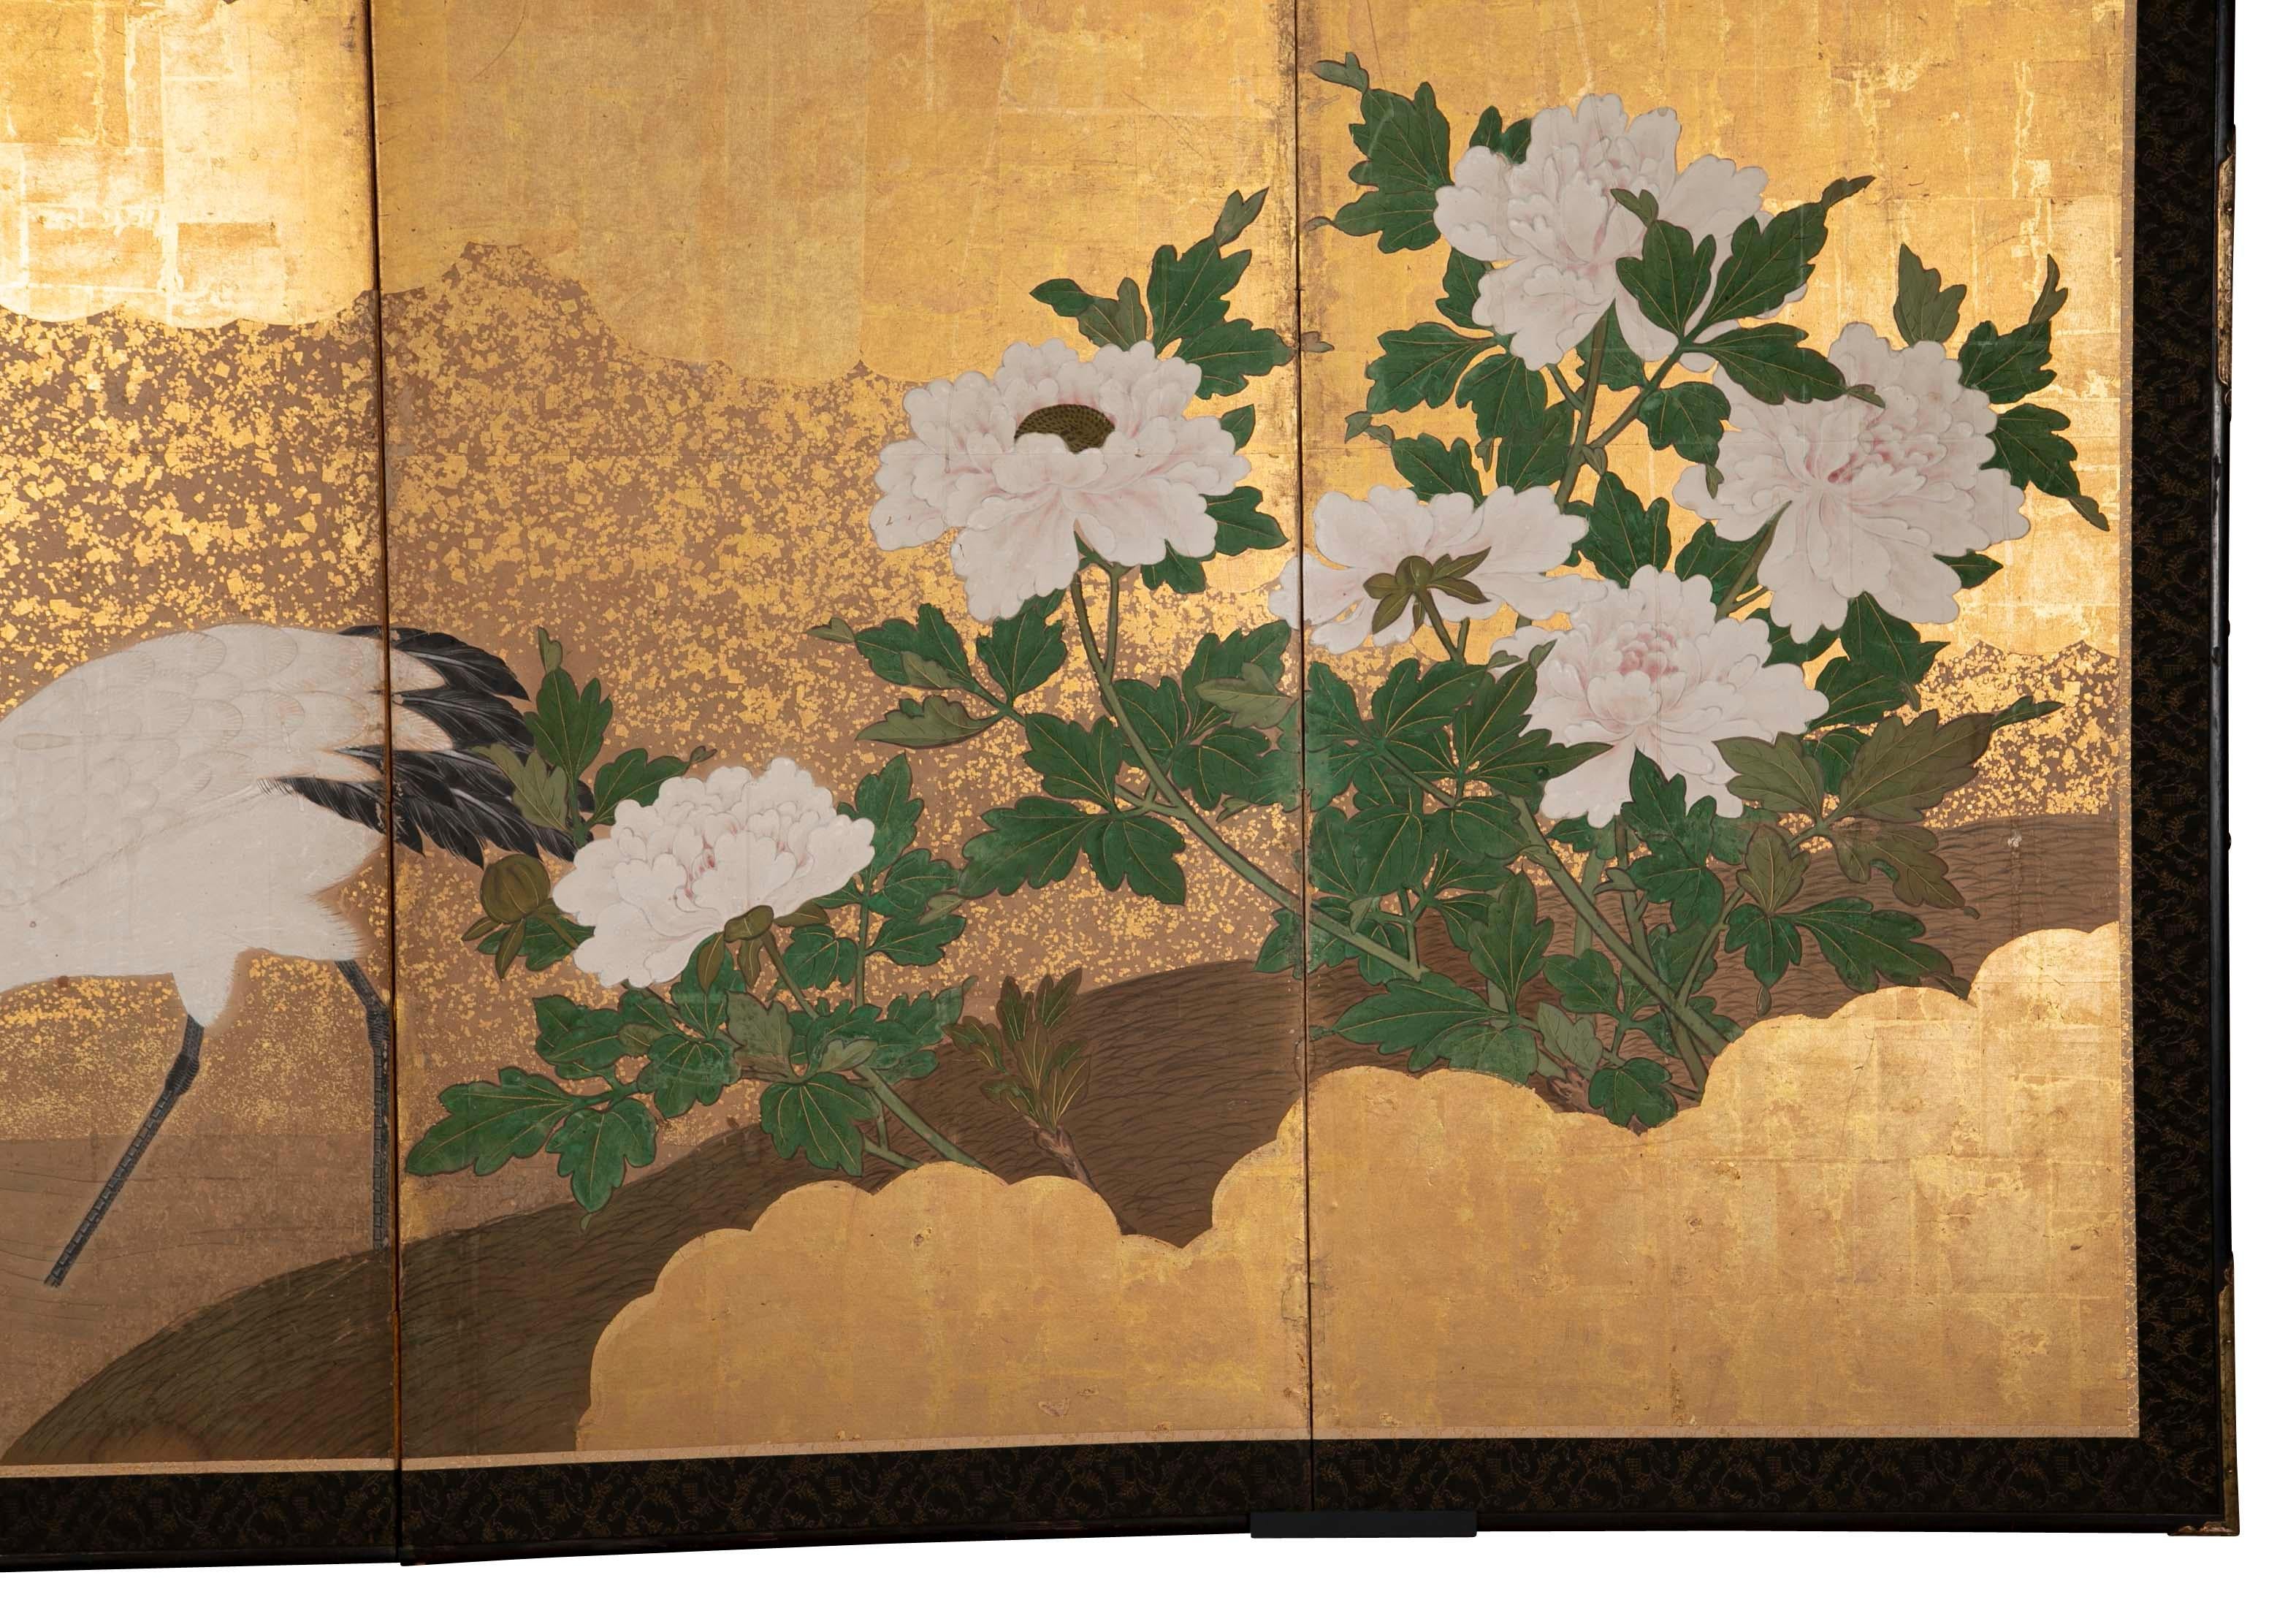 Painted Japanese Edo Period Screen Depicting Cranes